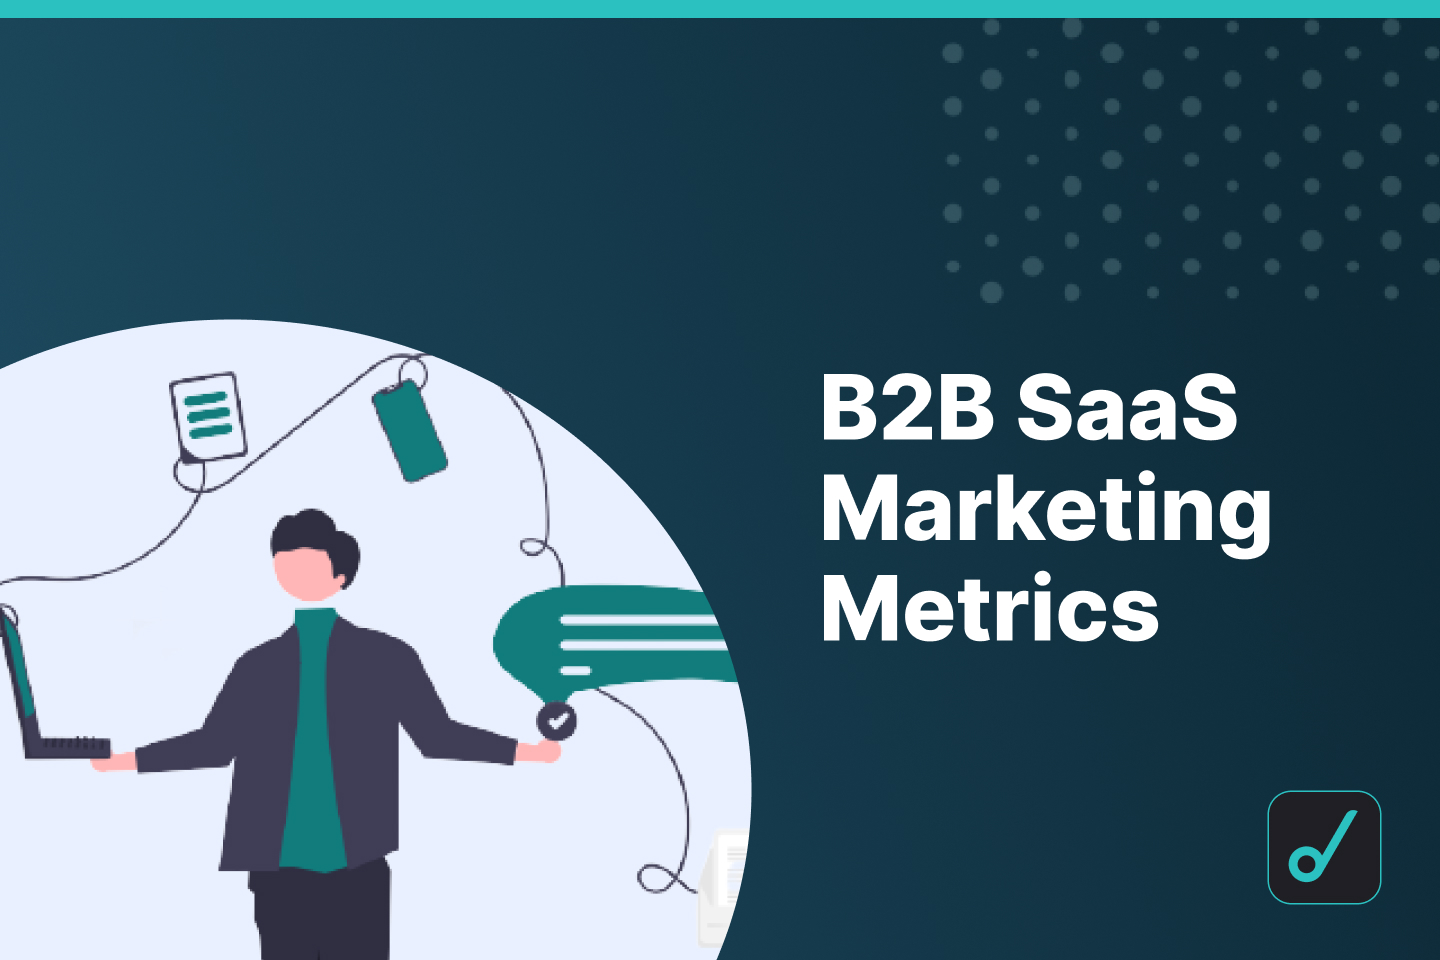 B2B SaaS Marketing Metrics: 8 Experts Share Their Opinions